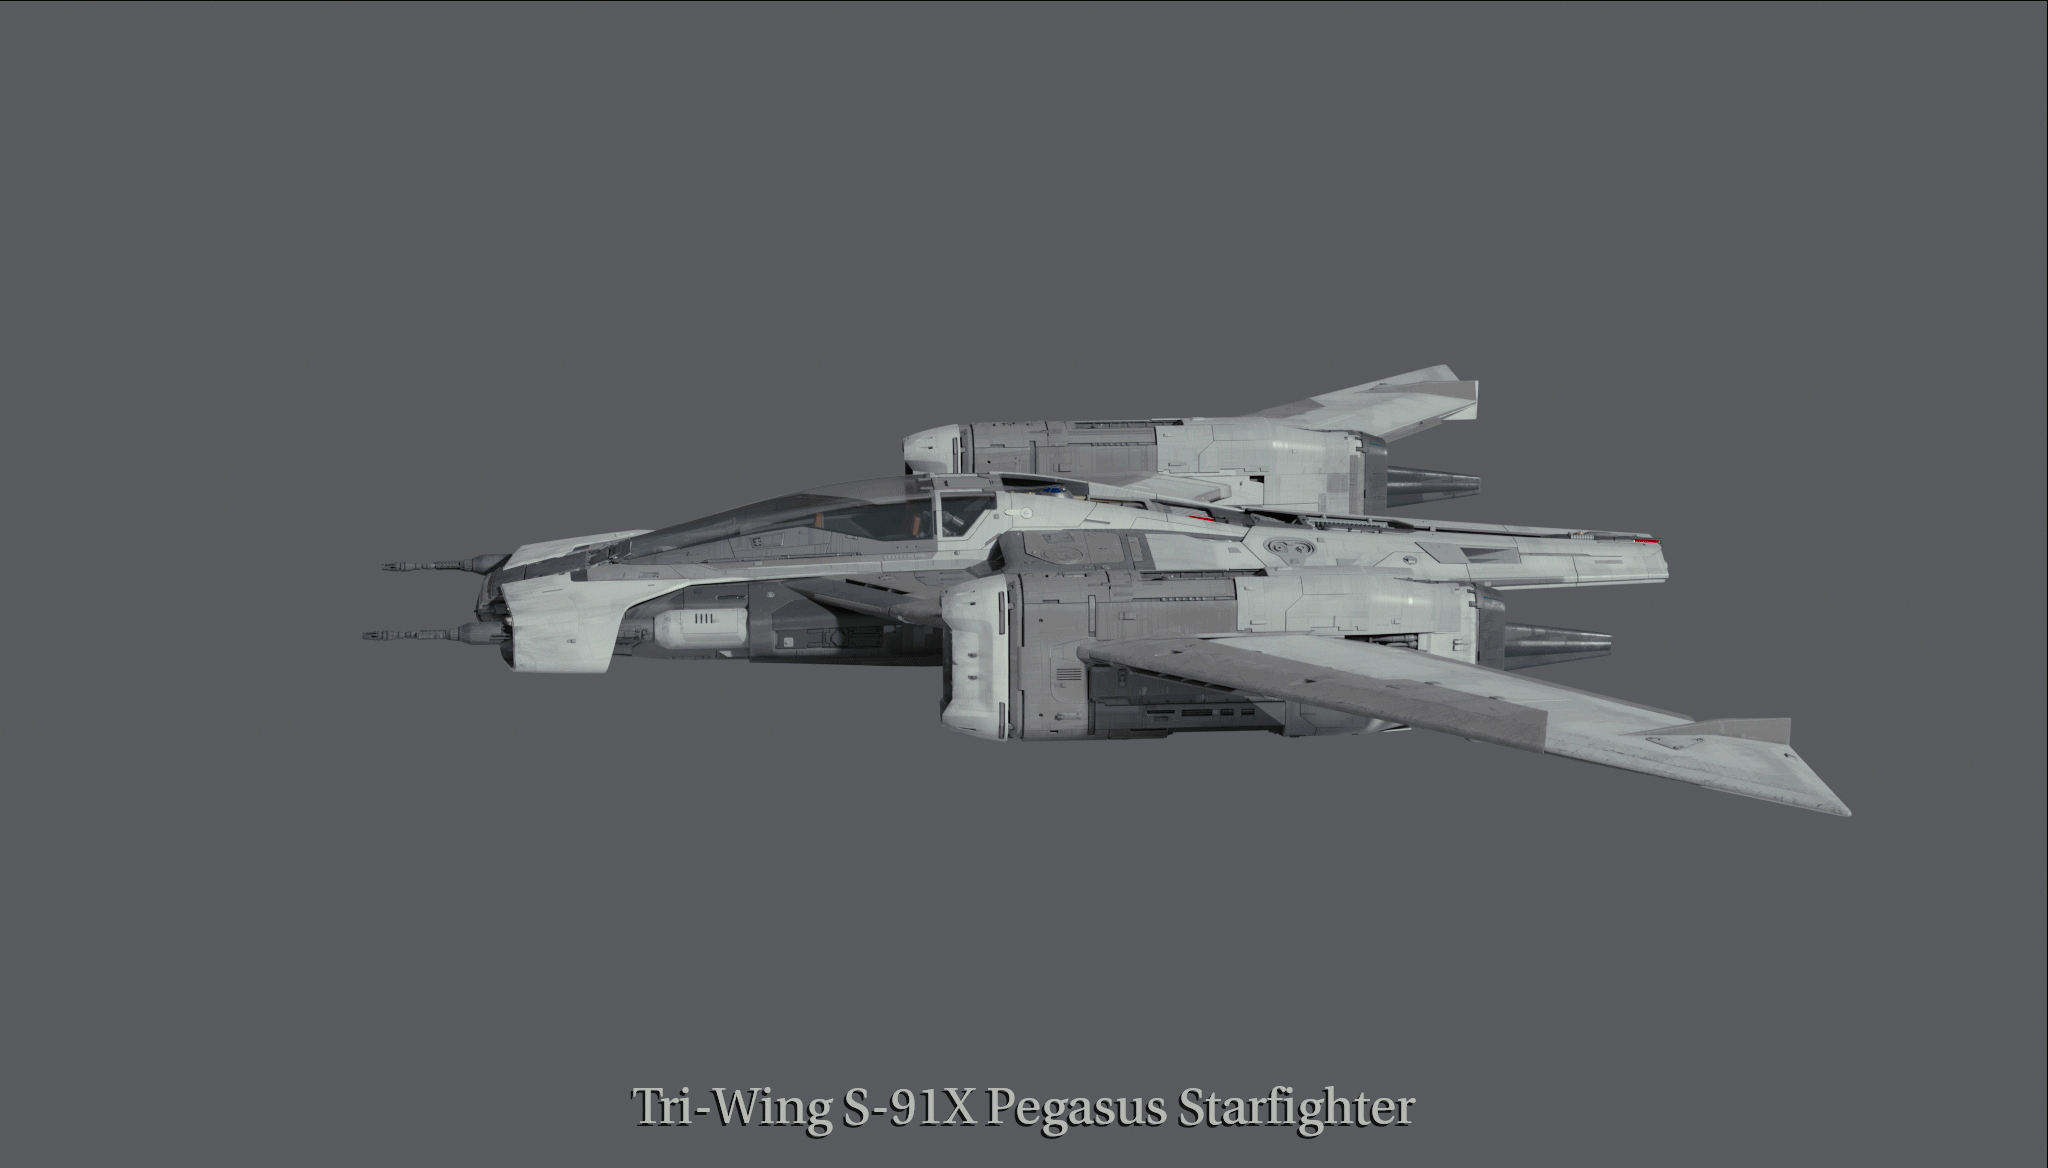 Fantasy starship Star Wars Tri-Wing S-91x Pegasus Starfighter, 2019, Porsche AG